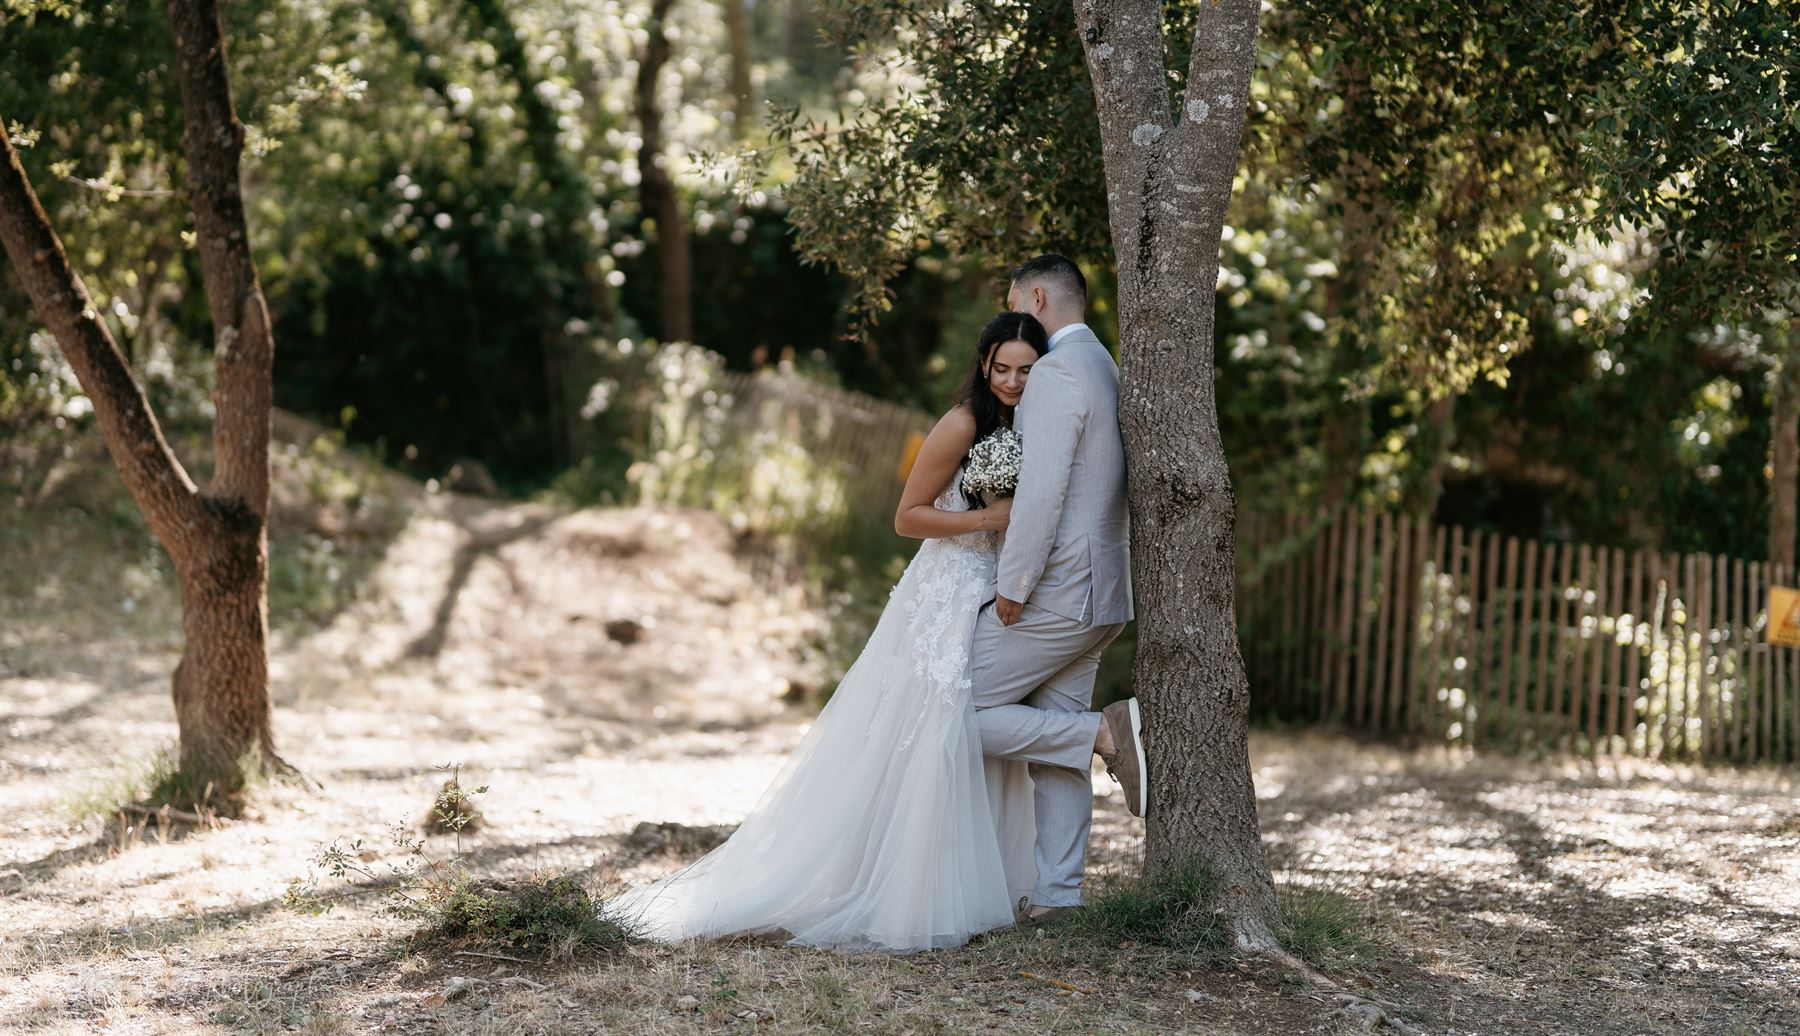 Wedding Photographer Aix en Provence: Capturing Love's Embrace 13